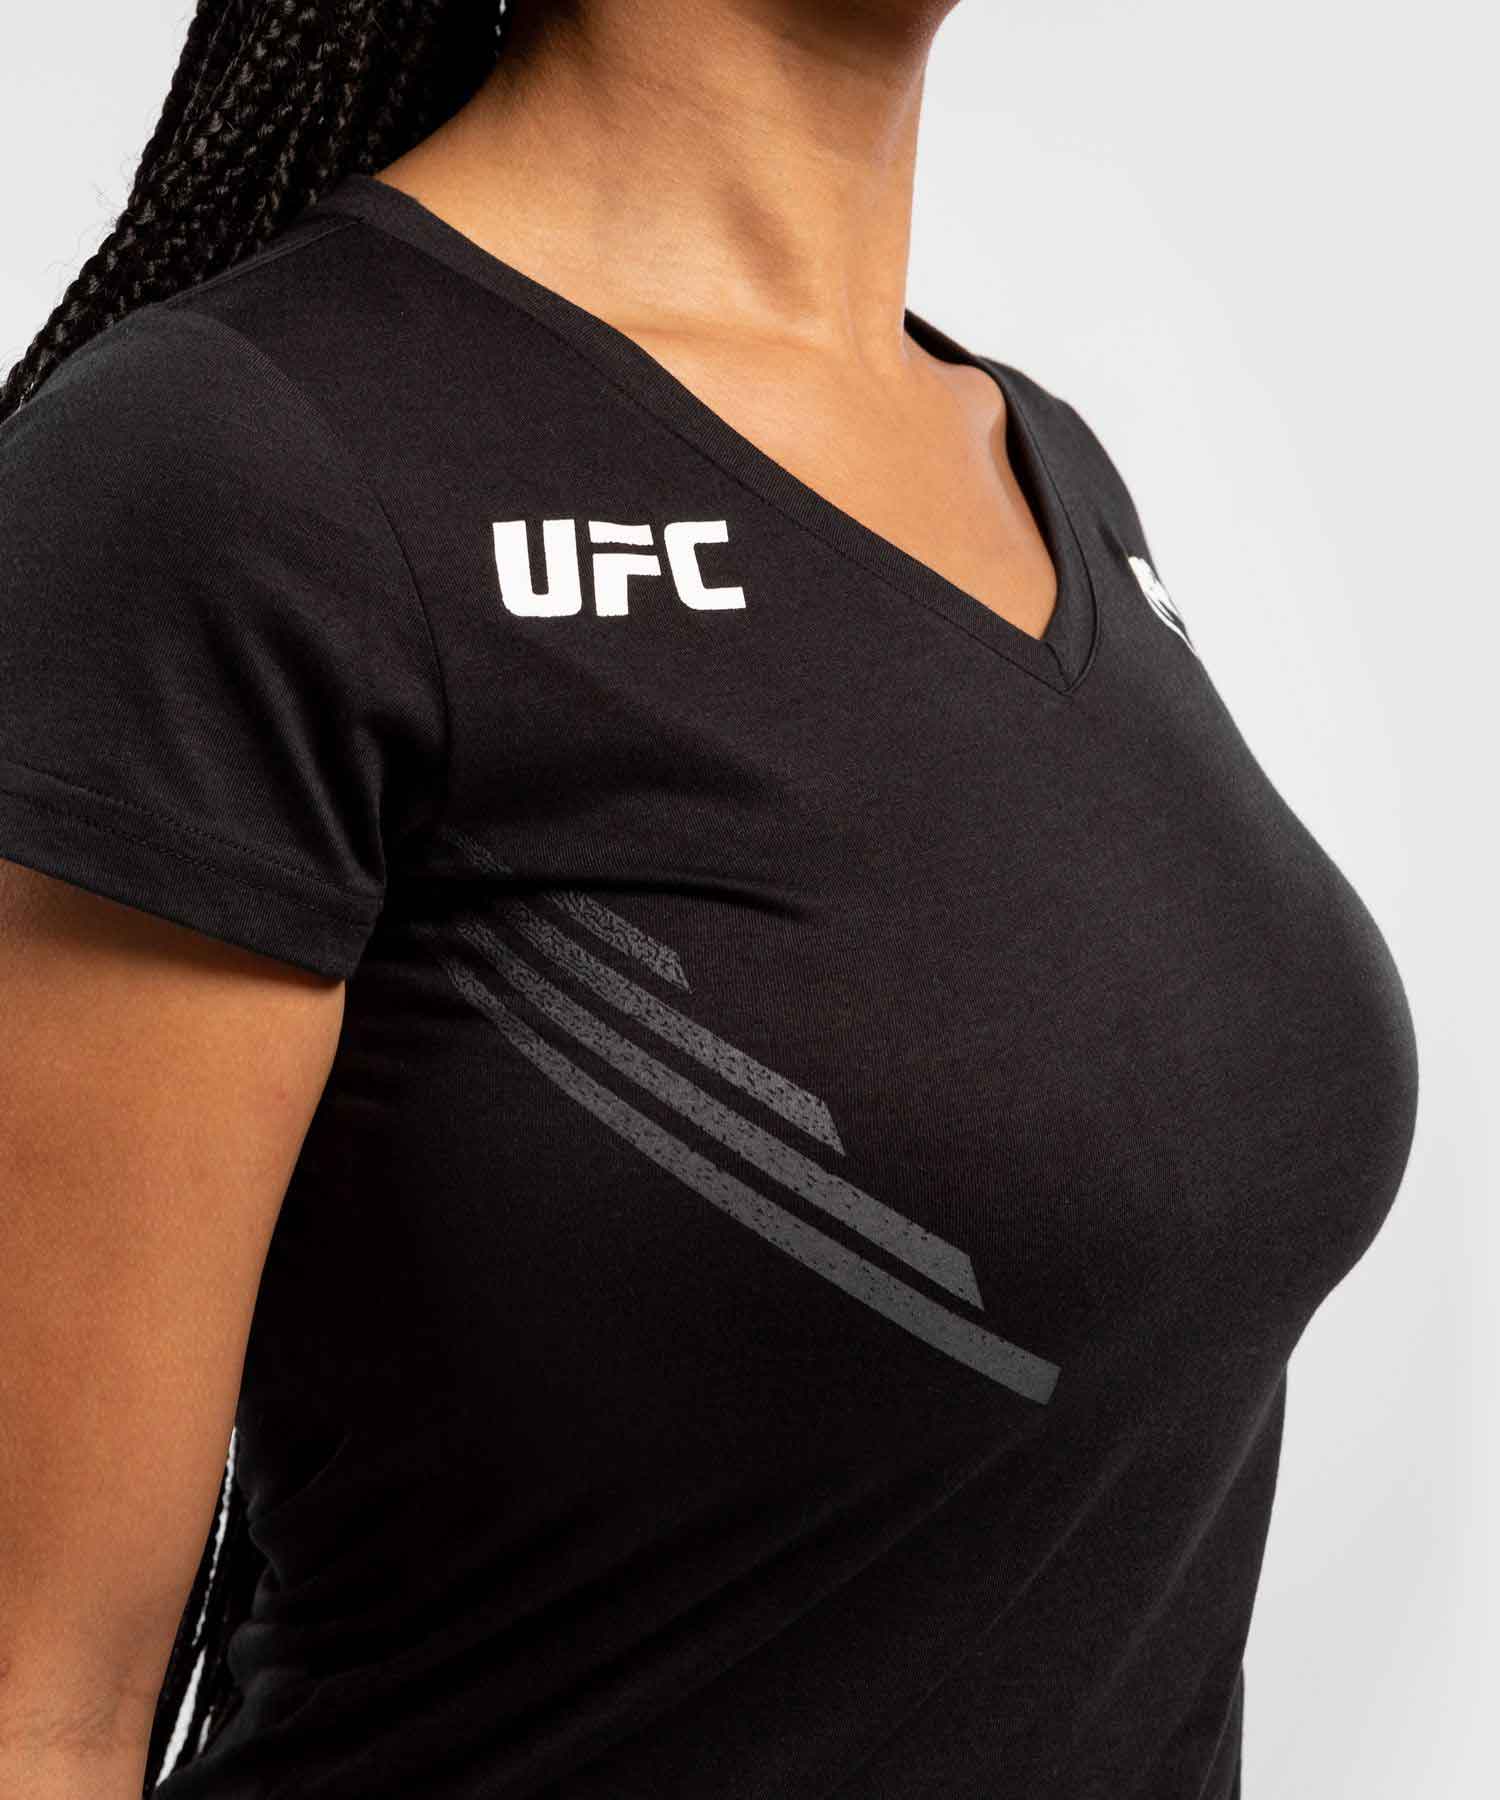 VENUM WOMEN／レディース　Tシャツ　　UFC VENUM REPLICA WOMEN'S JERSEY／UFC VENUM レプリカ レディース ジャージ（黒）